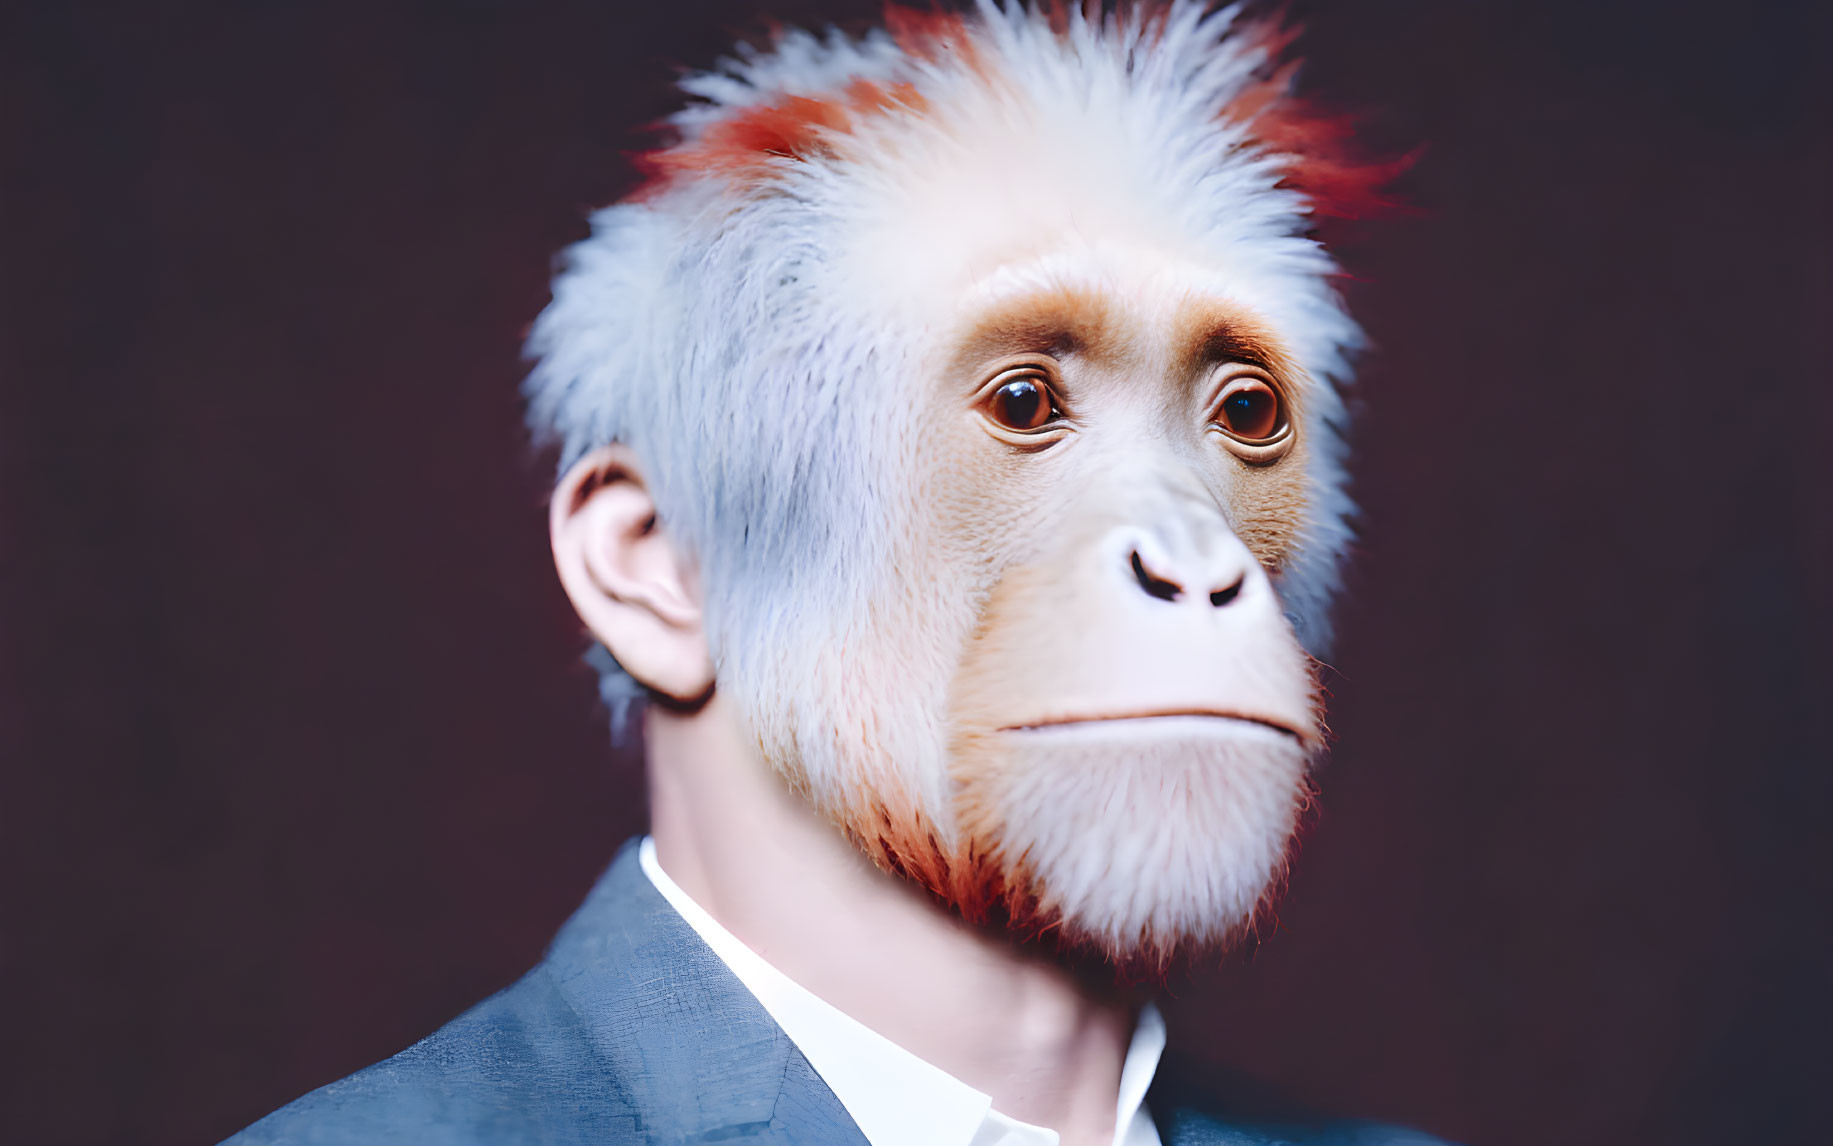 Surreal digital art: Monkey face on human body in suit against dark backdrop